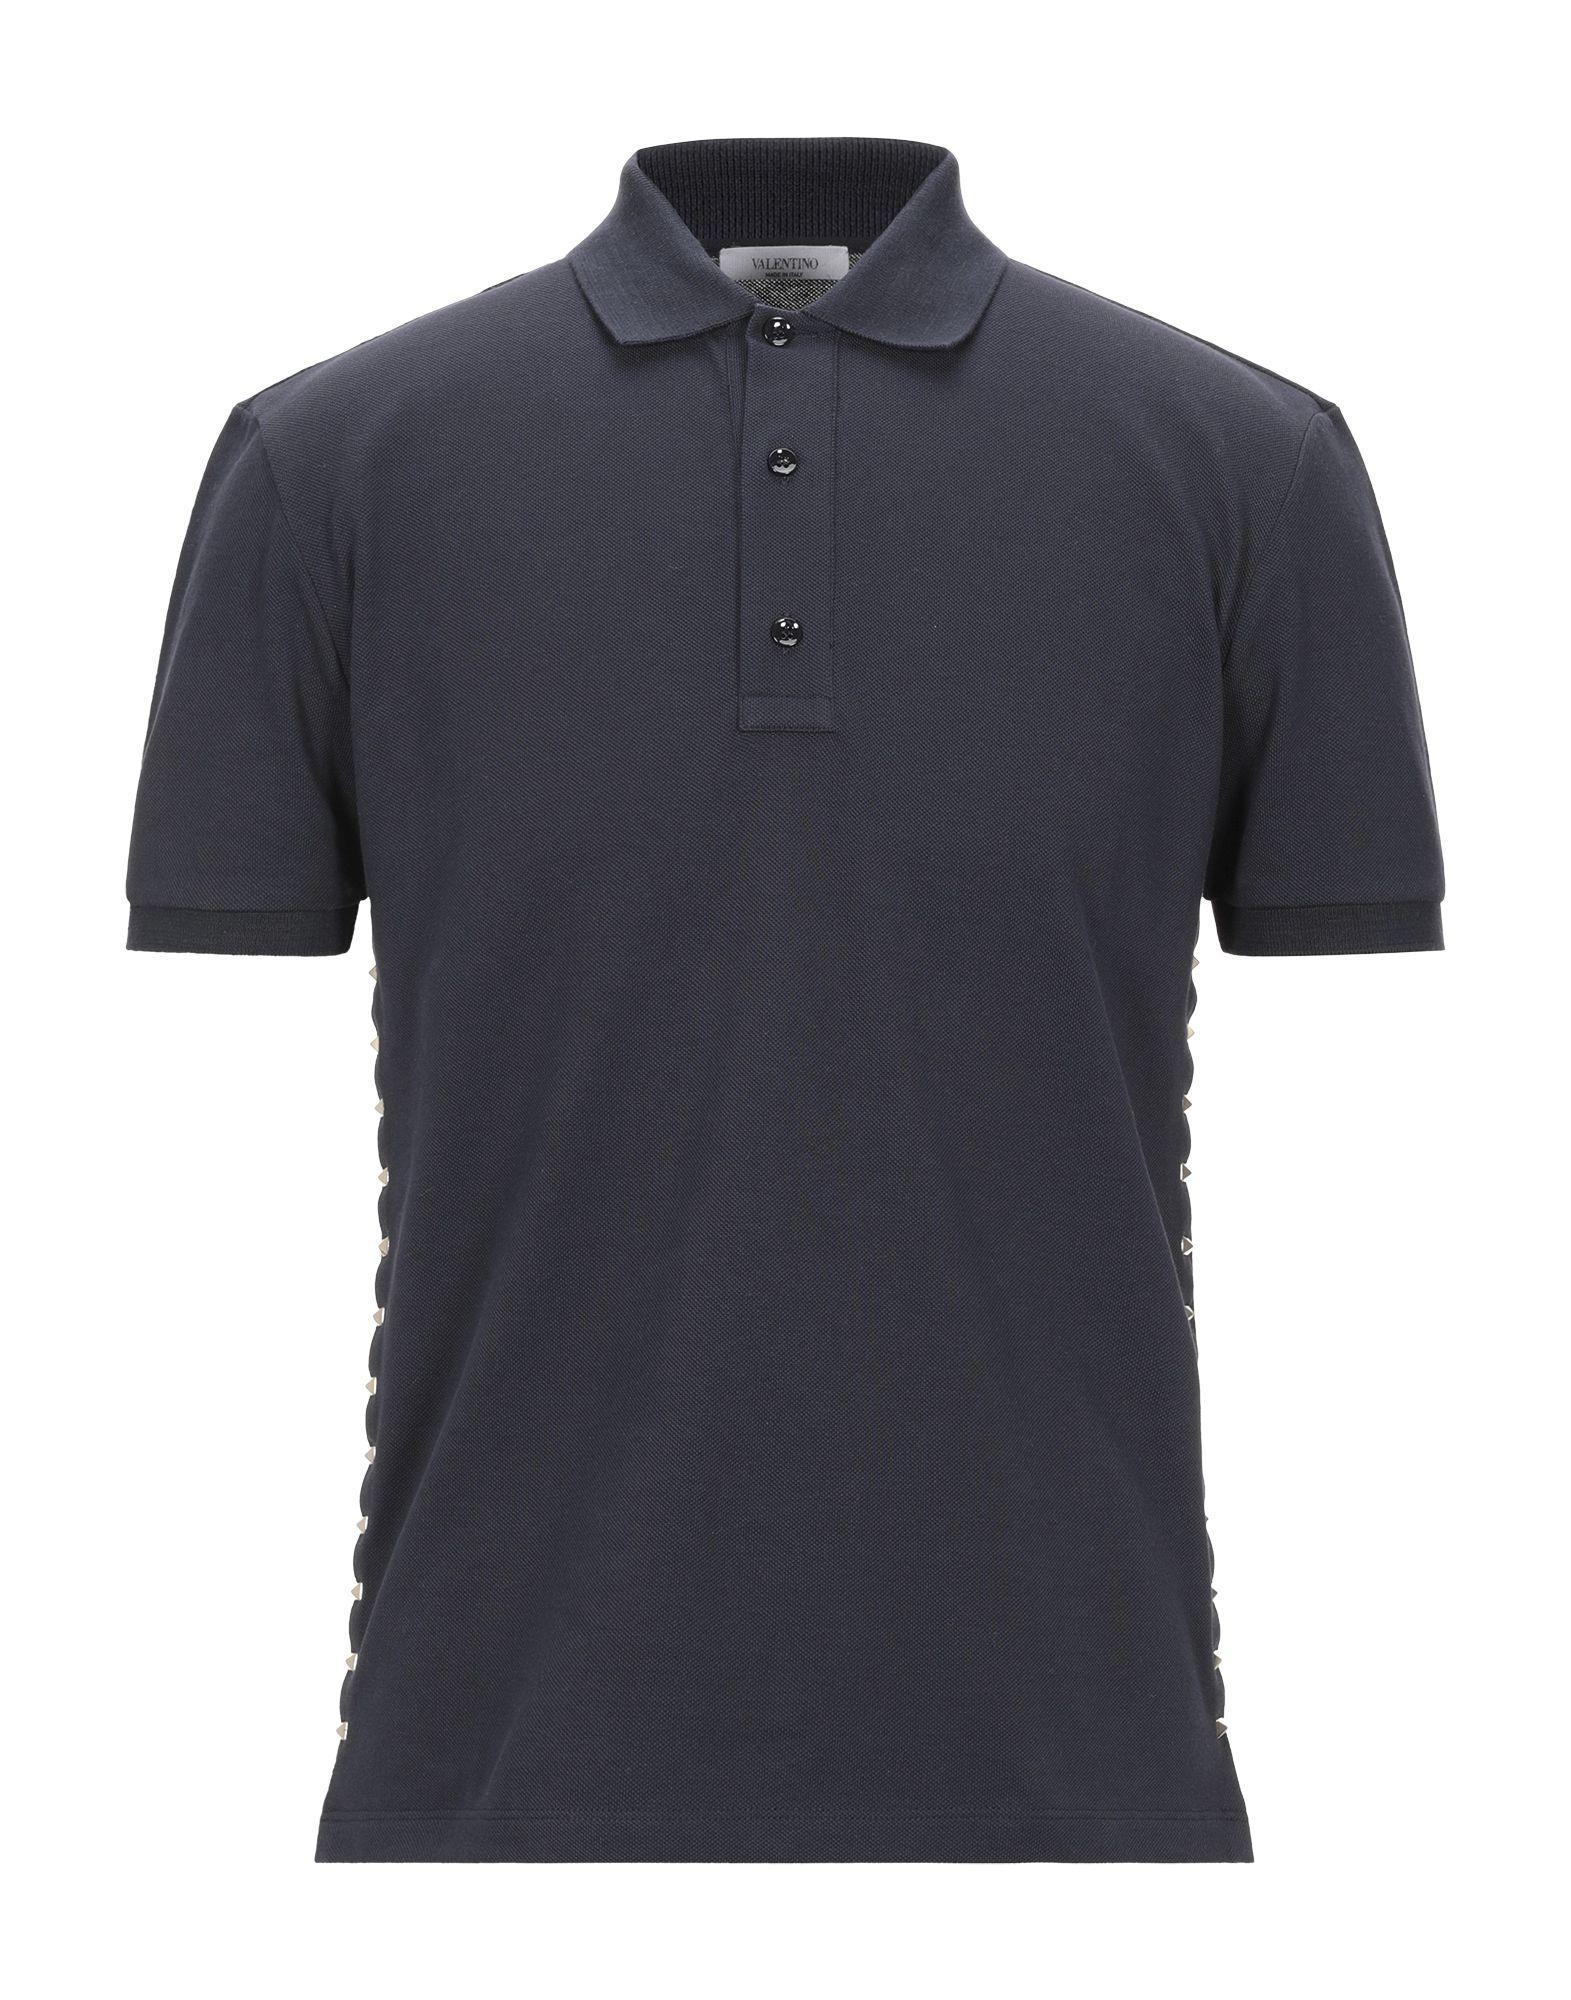 Valentino Cotton Polo Shirt in Dark Blue (Blue) for Men - Lyst